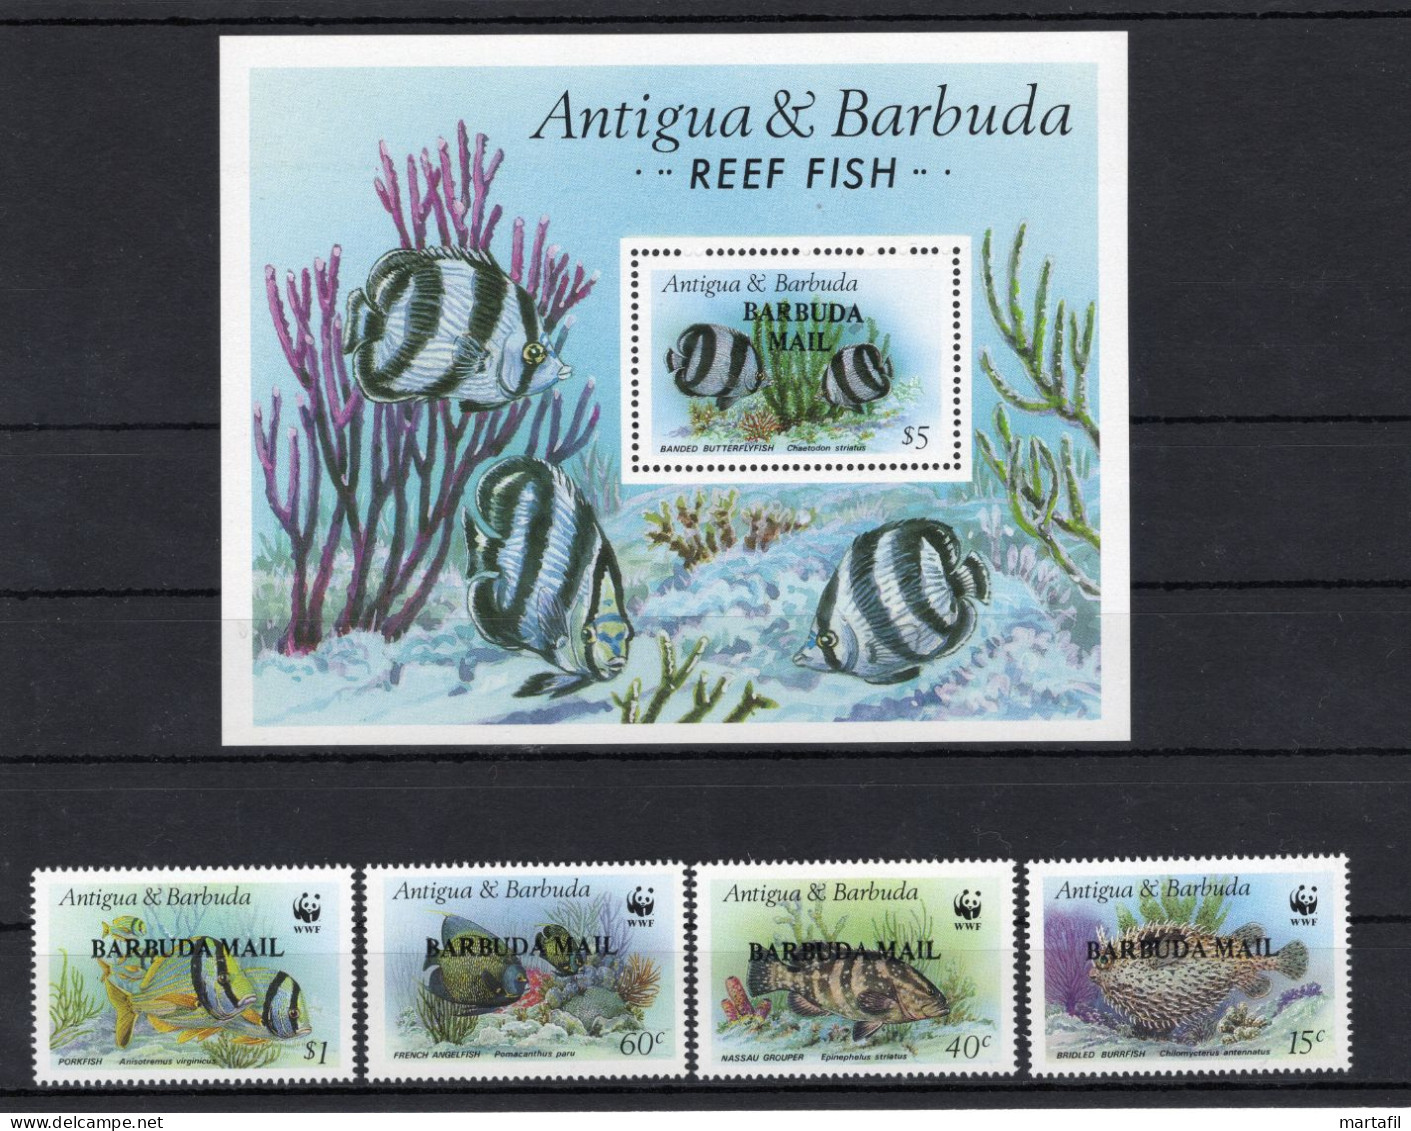 1987 BARBUDA "Antigua & Barbuda" WWF Reef Fish RARE SET MNH **, "Barbuda Mail" Overprint - Unused Stamps